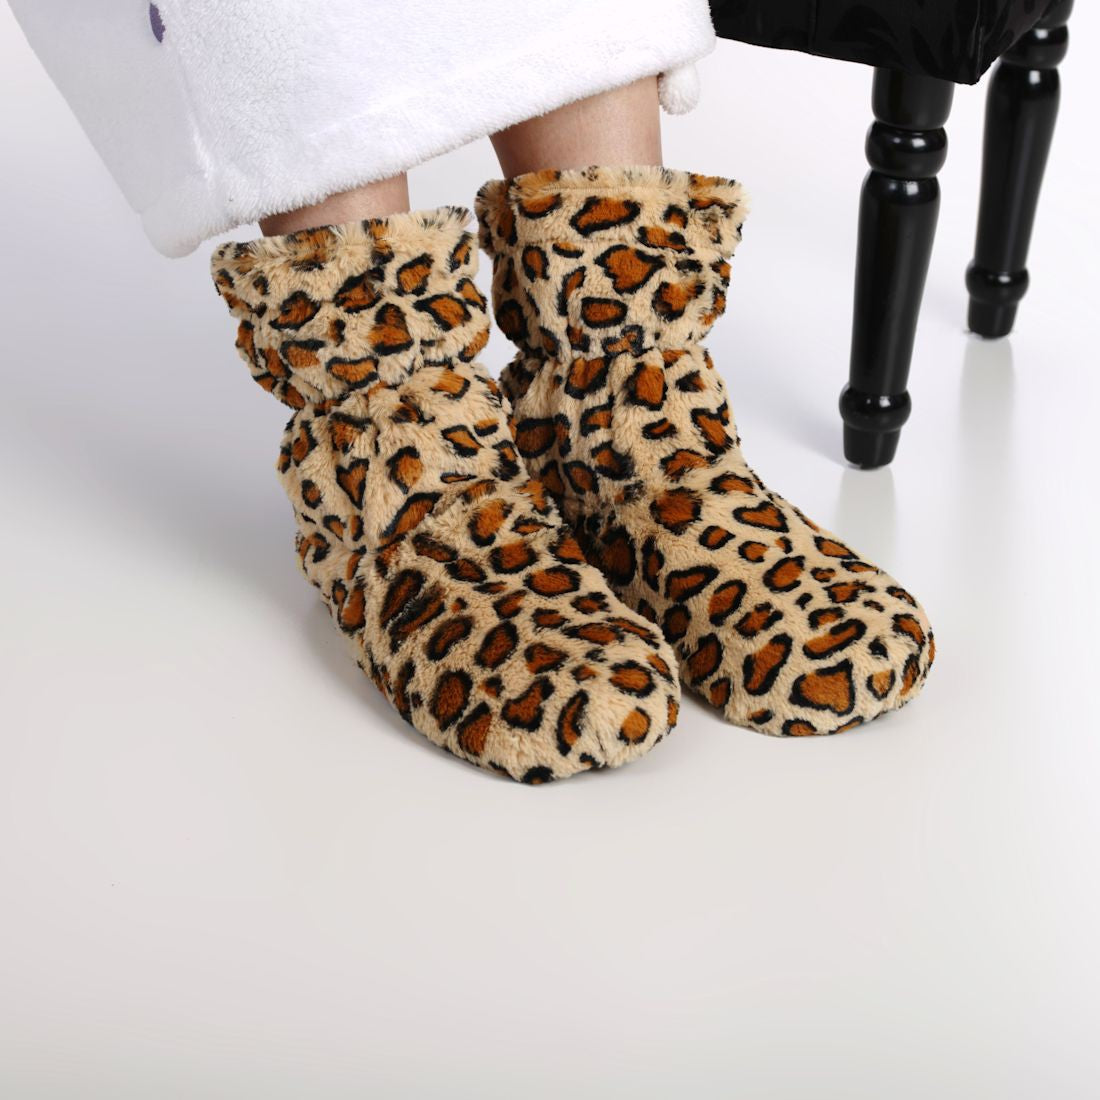 Zhu-Zhu Leopard Plush Feet Warmers - Microwavable Slipper Boots